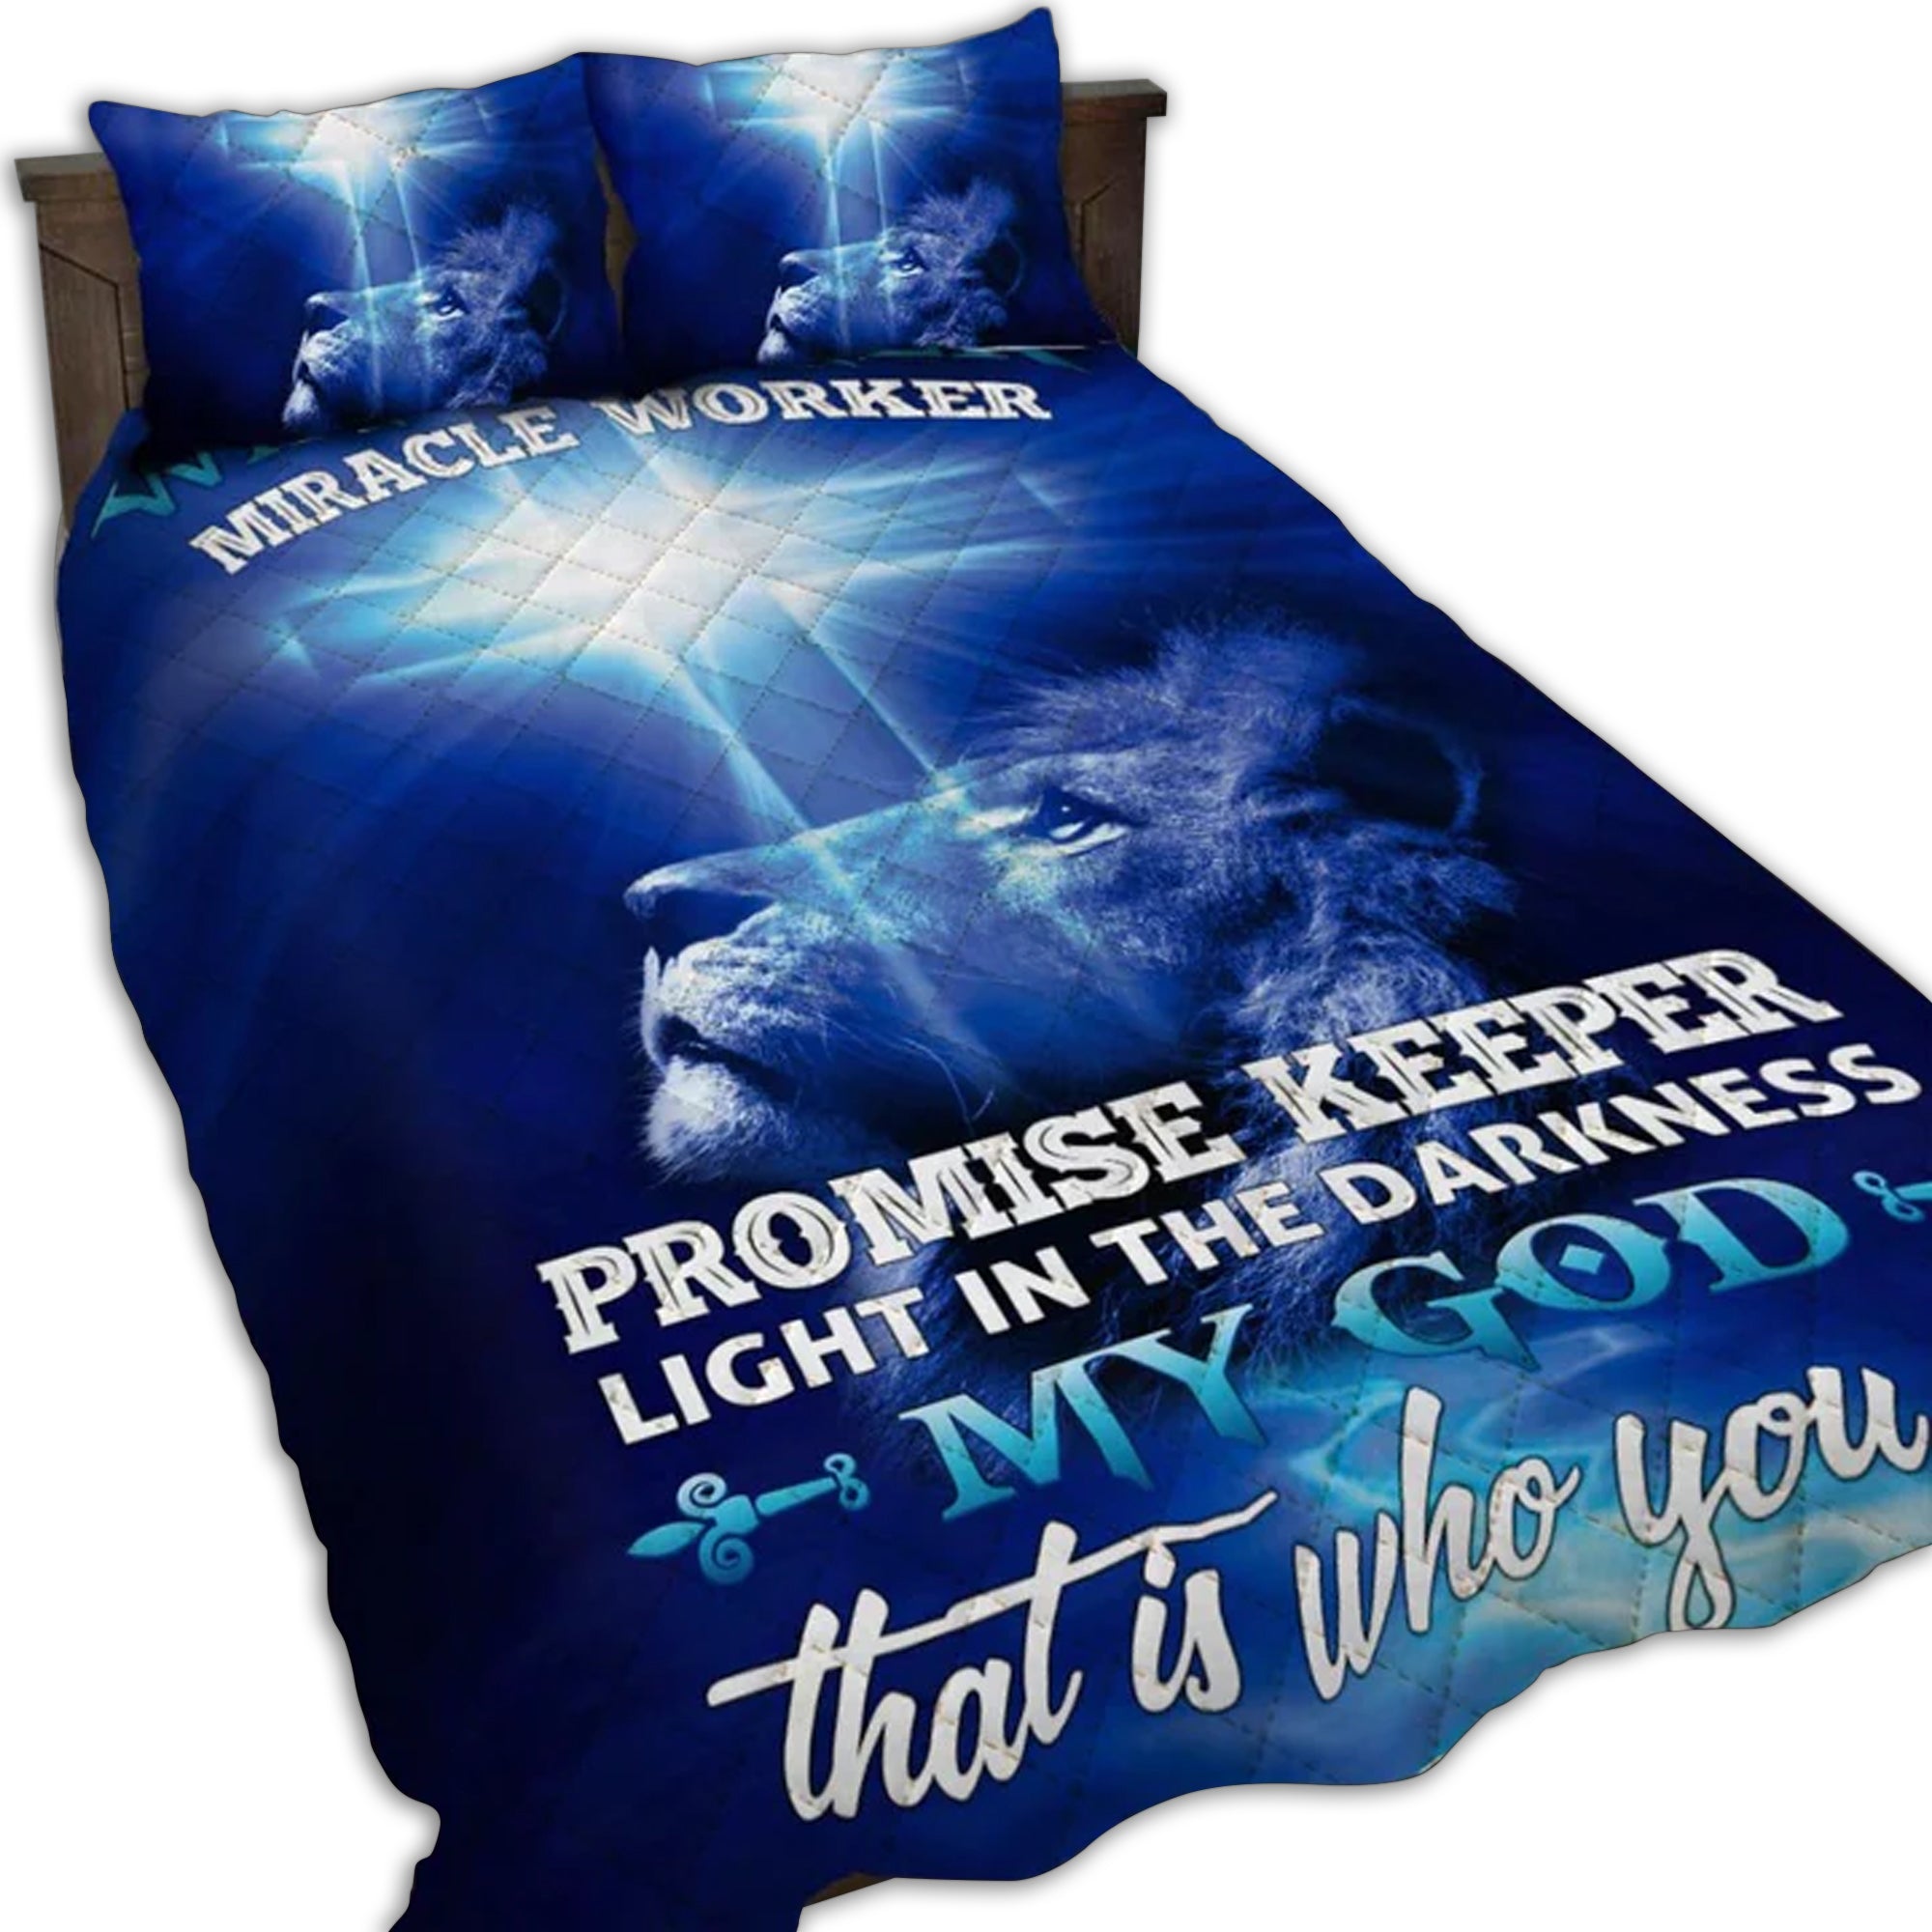 jesus-christ-way-maker-miracle-worker-quilt-bed-set